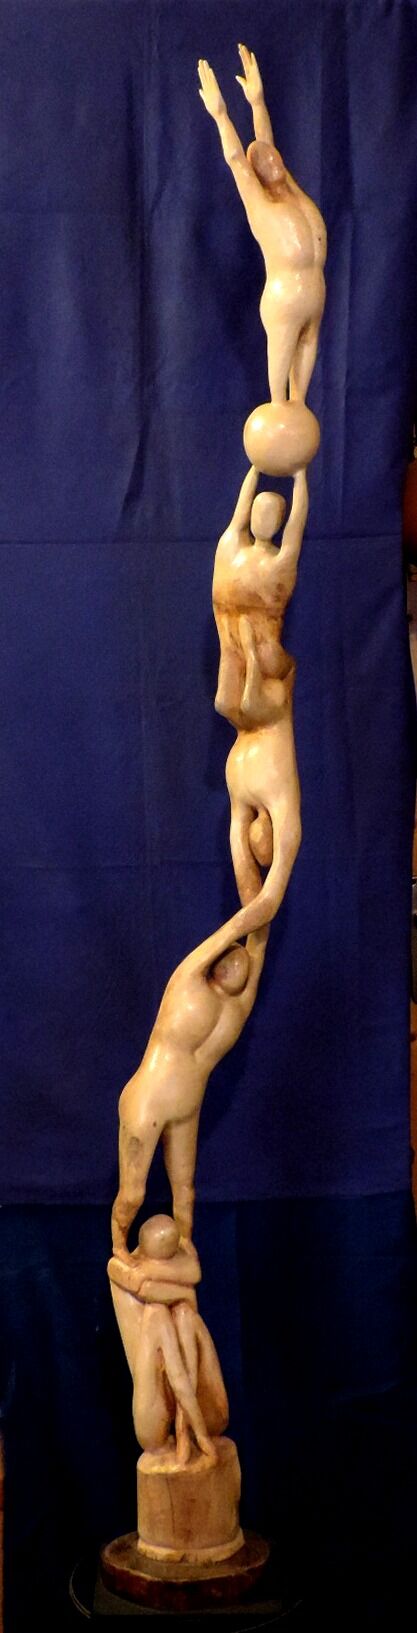 Equilibrio - a Sculpture & Installation by VICO